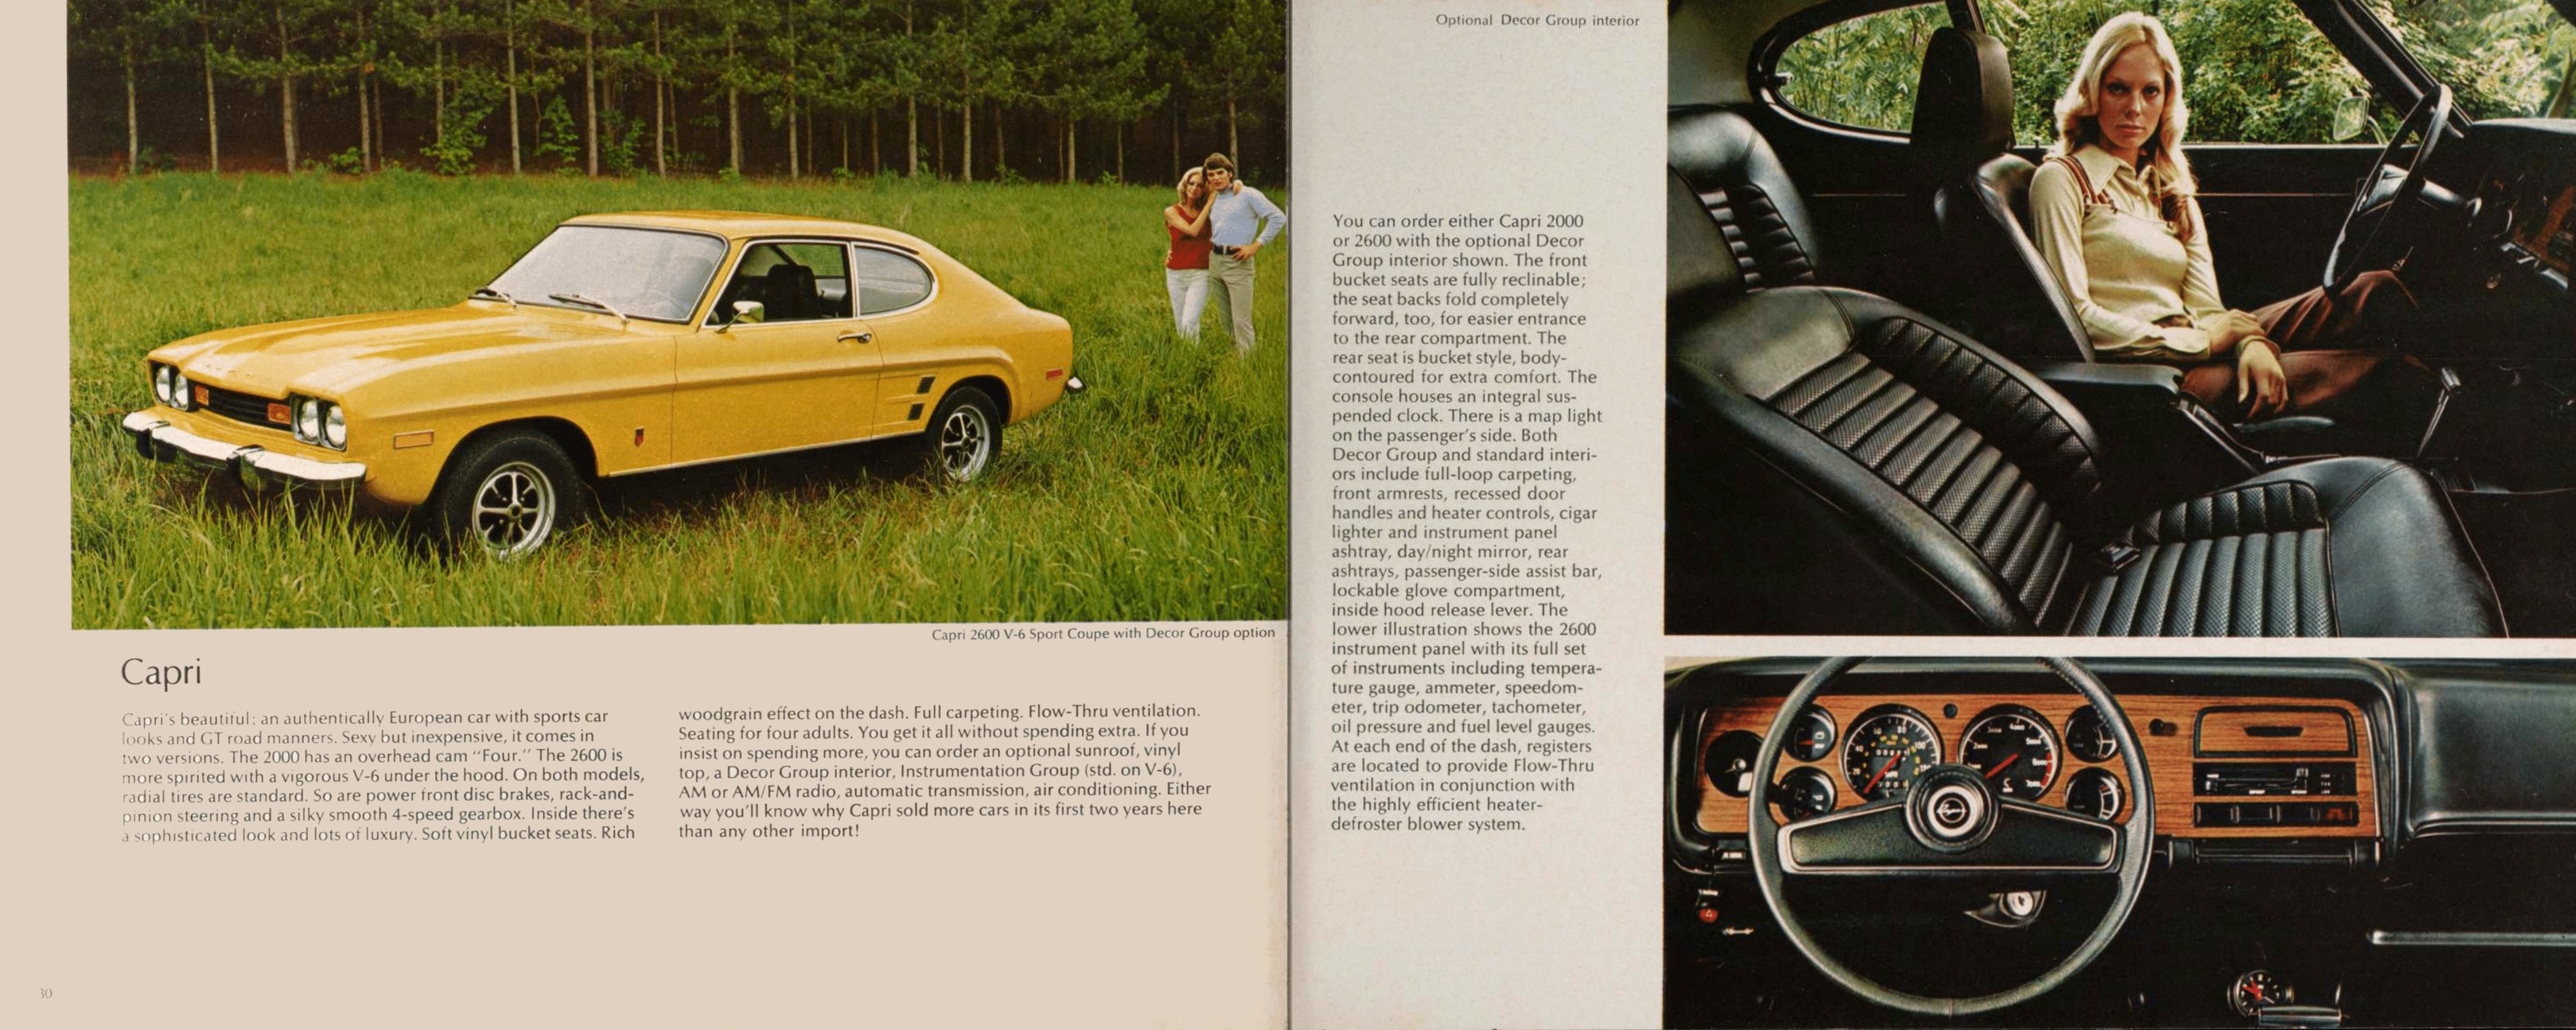 1973 Lincoln Mercury Full Line Brochure 30-31